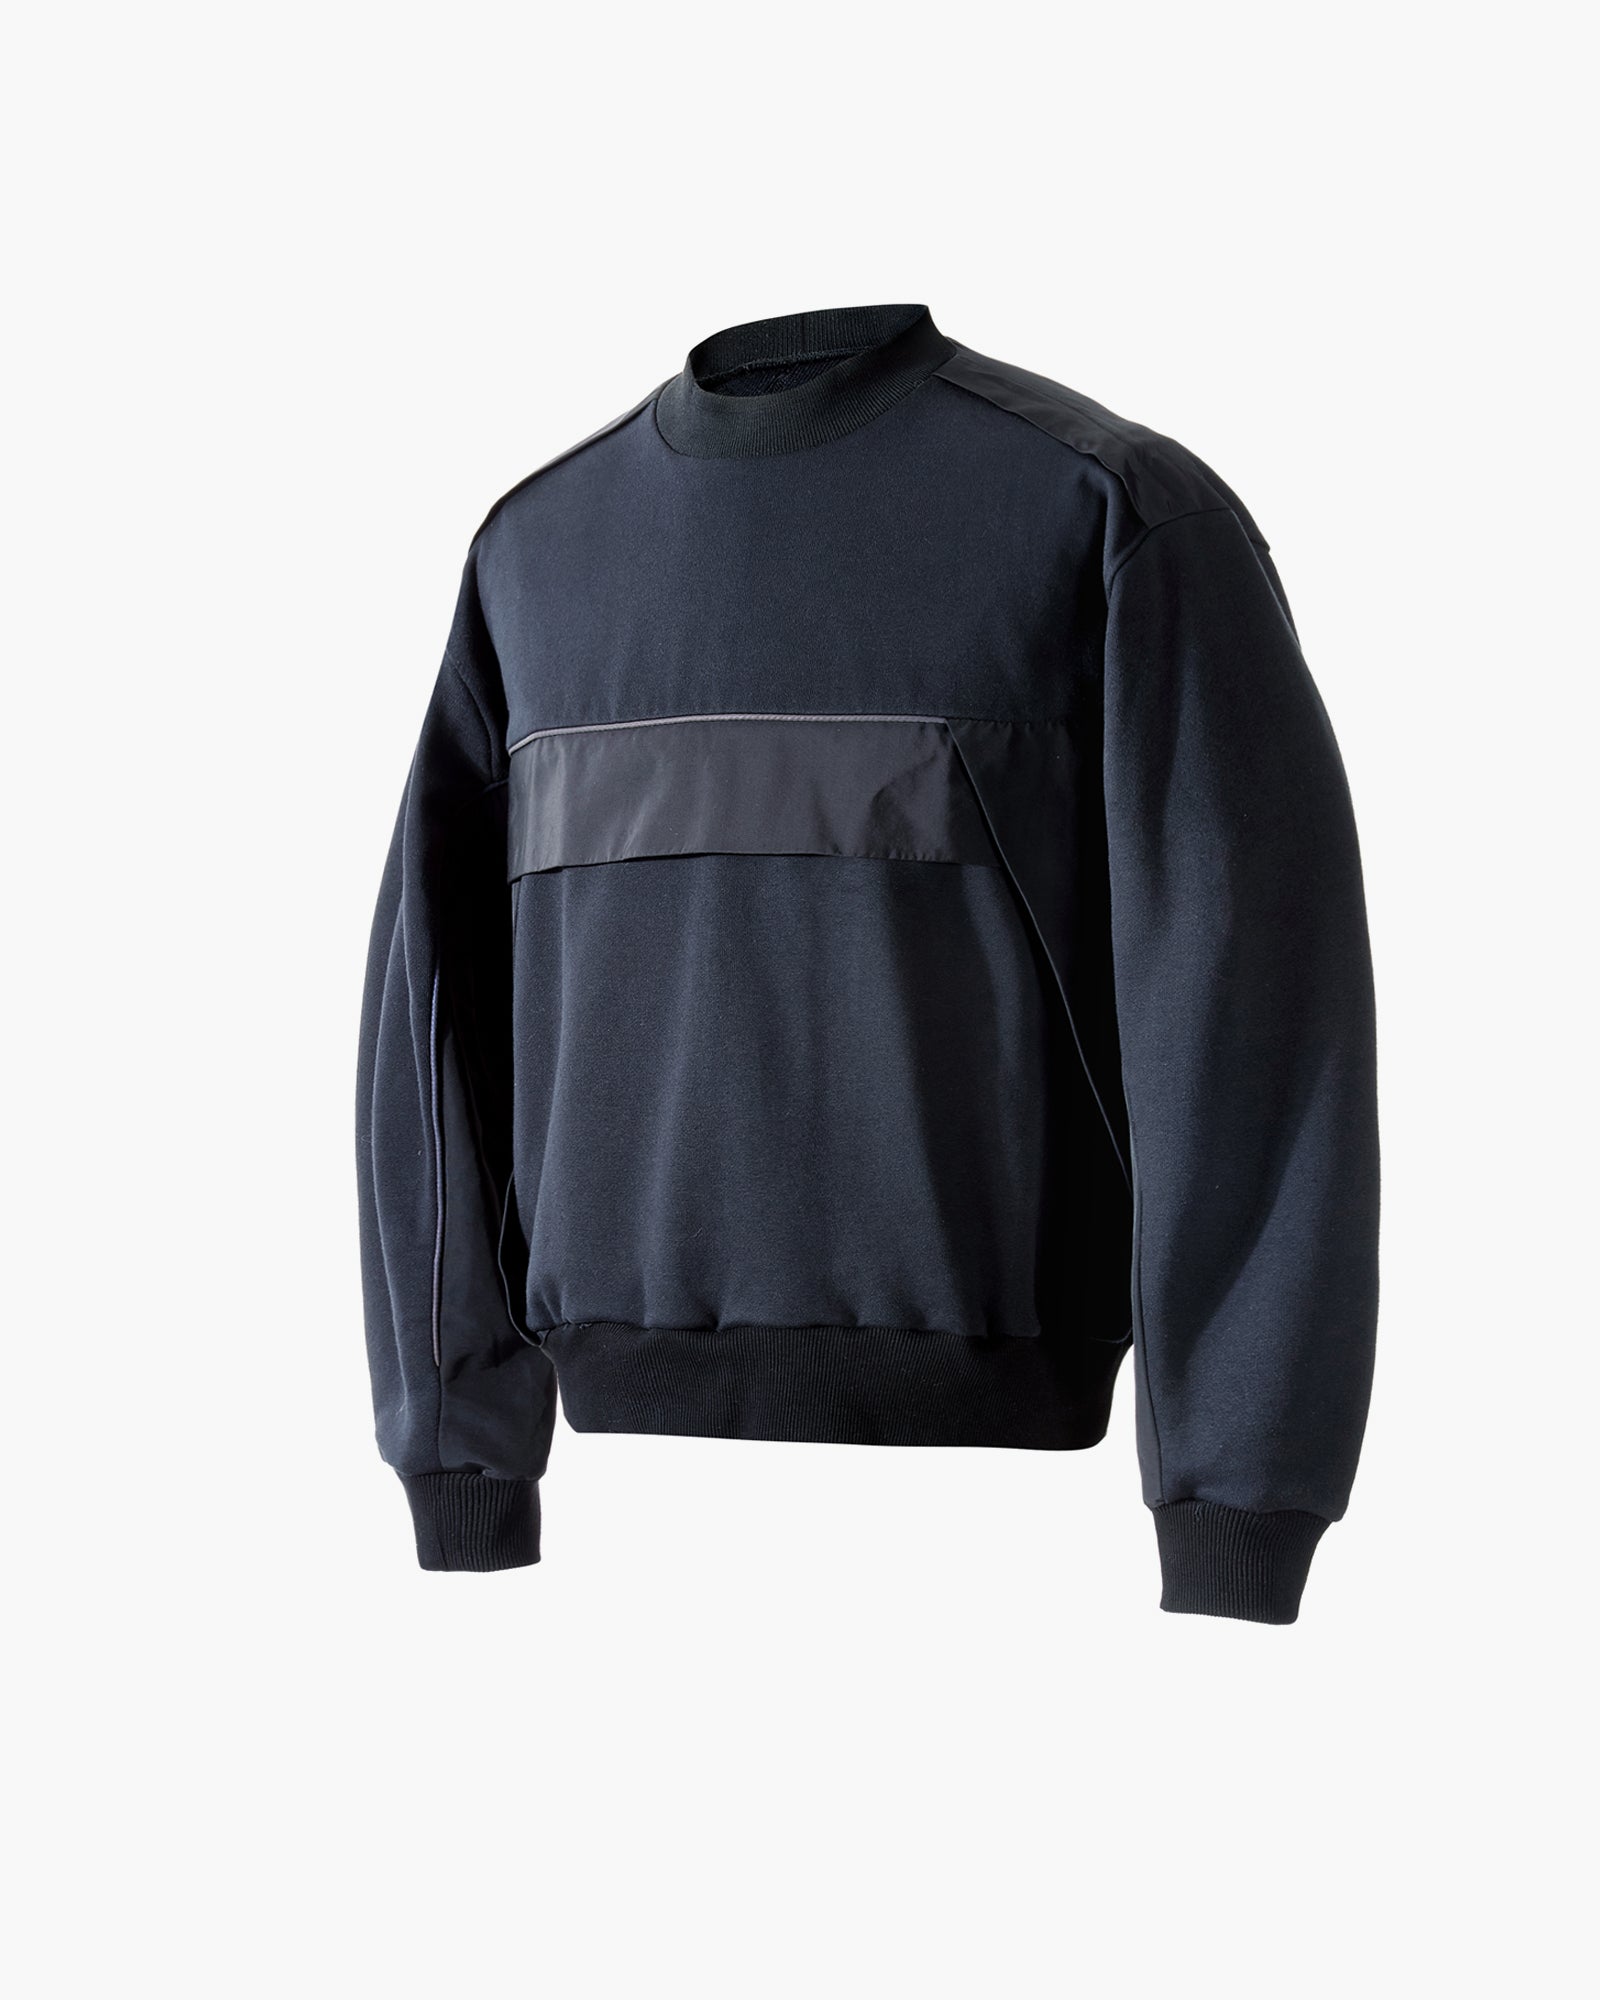 ROSEN-X Hydra Sweatshirt in Eco-Cotton